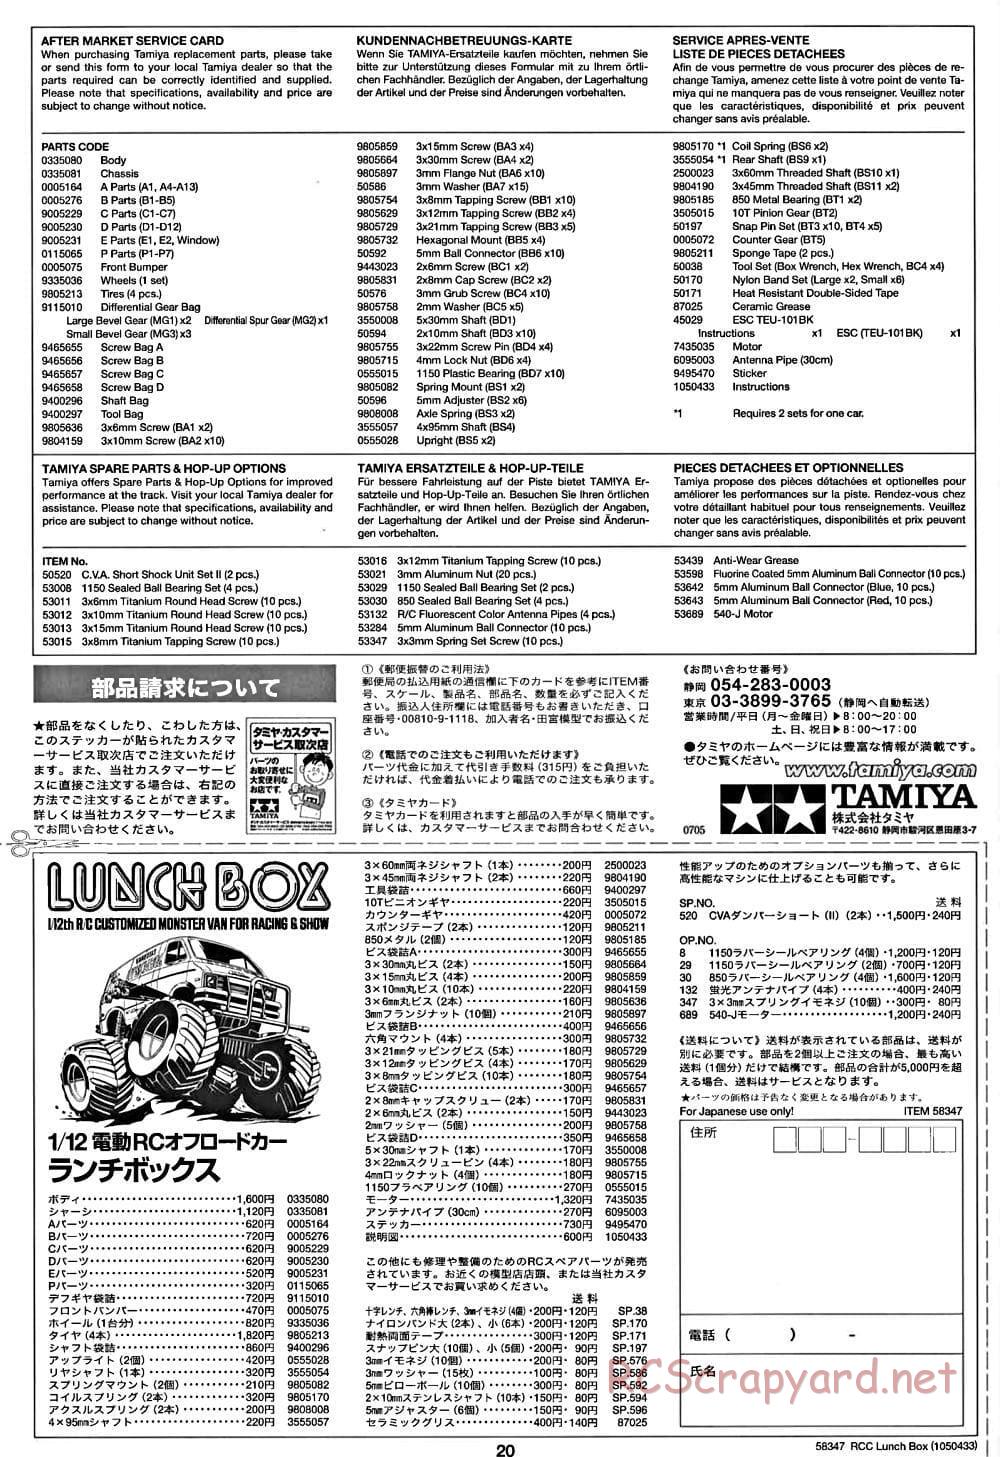 Tamiya - Vanessas Lunchbox - CW-01 Chassis - Manual - Page 20